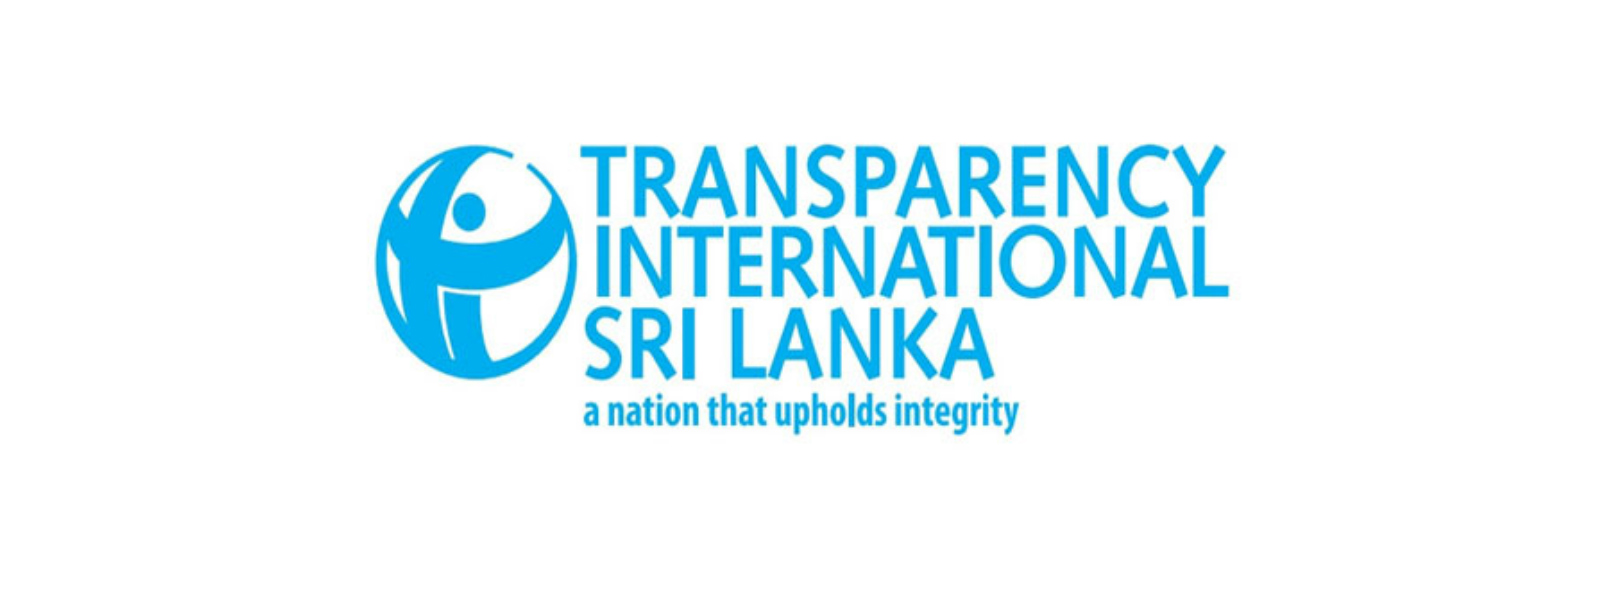 ICC must make findings on SLC public - TISL 